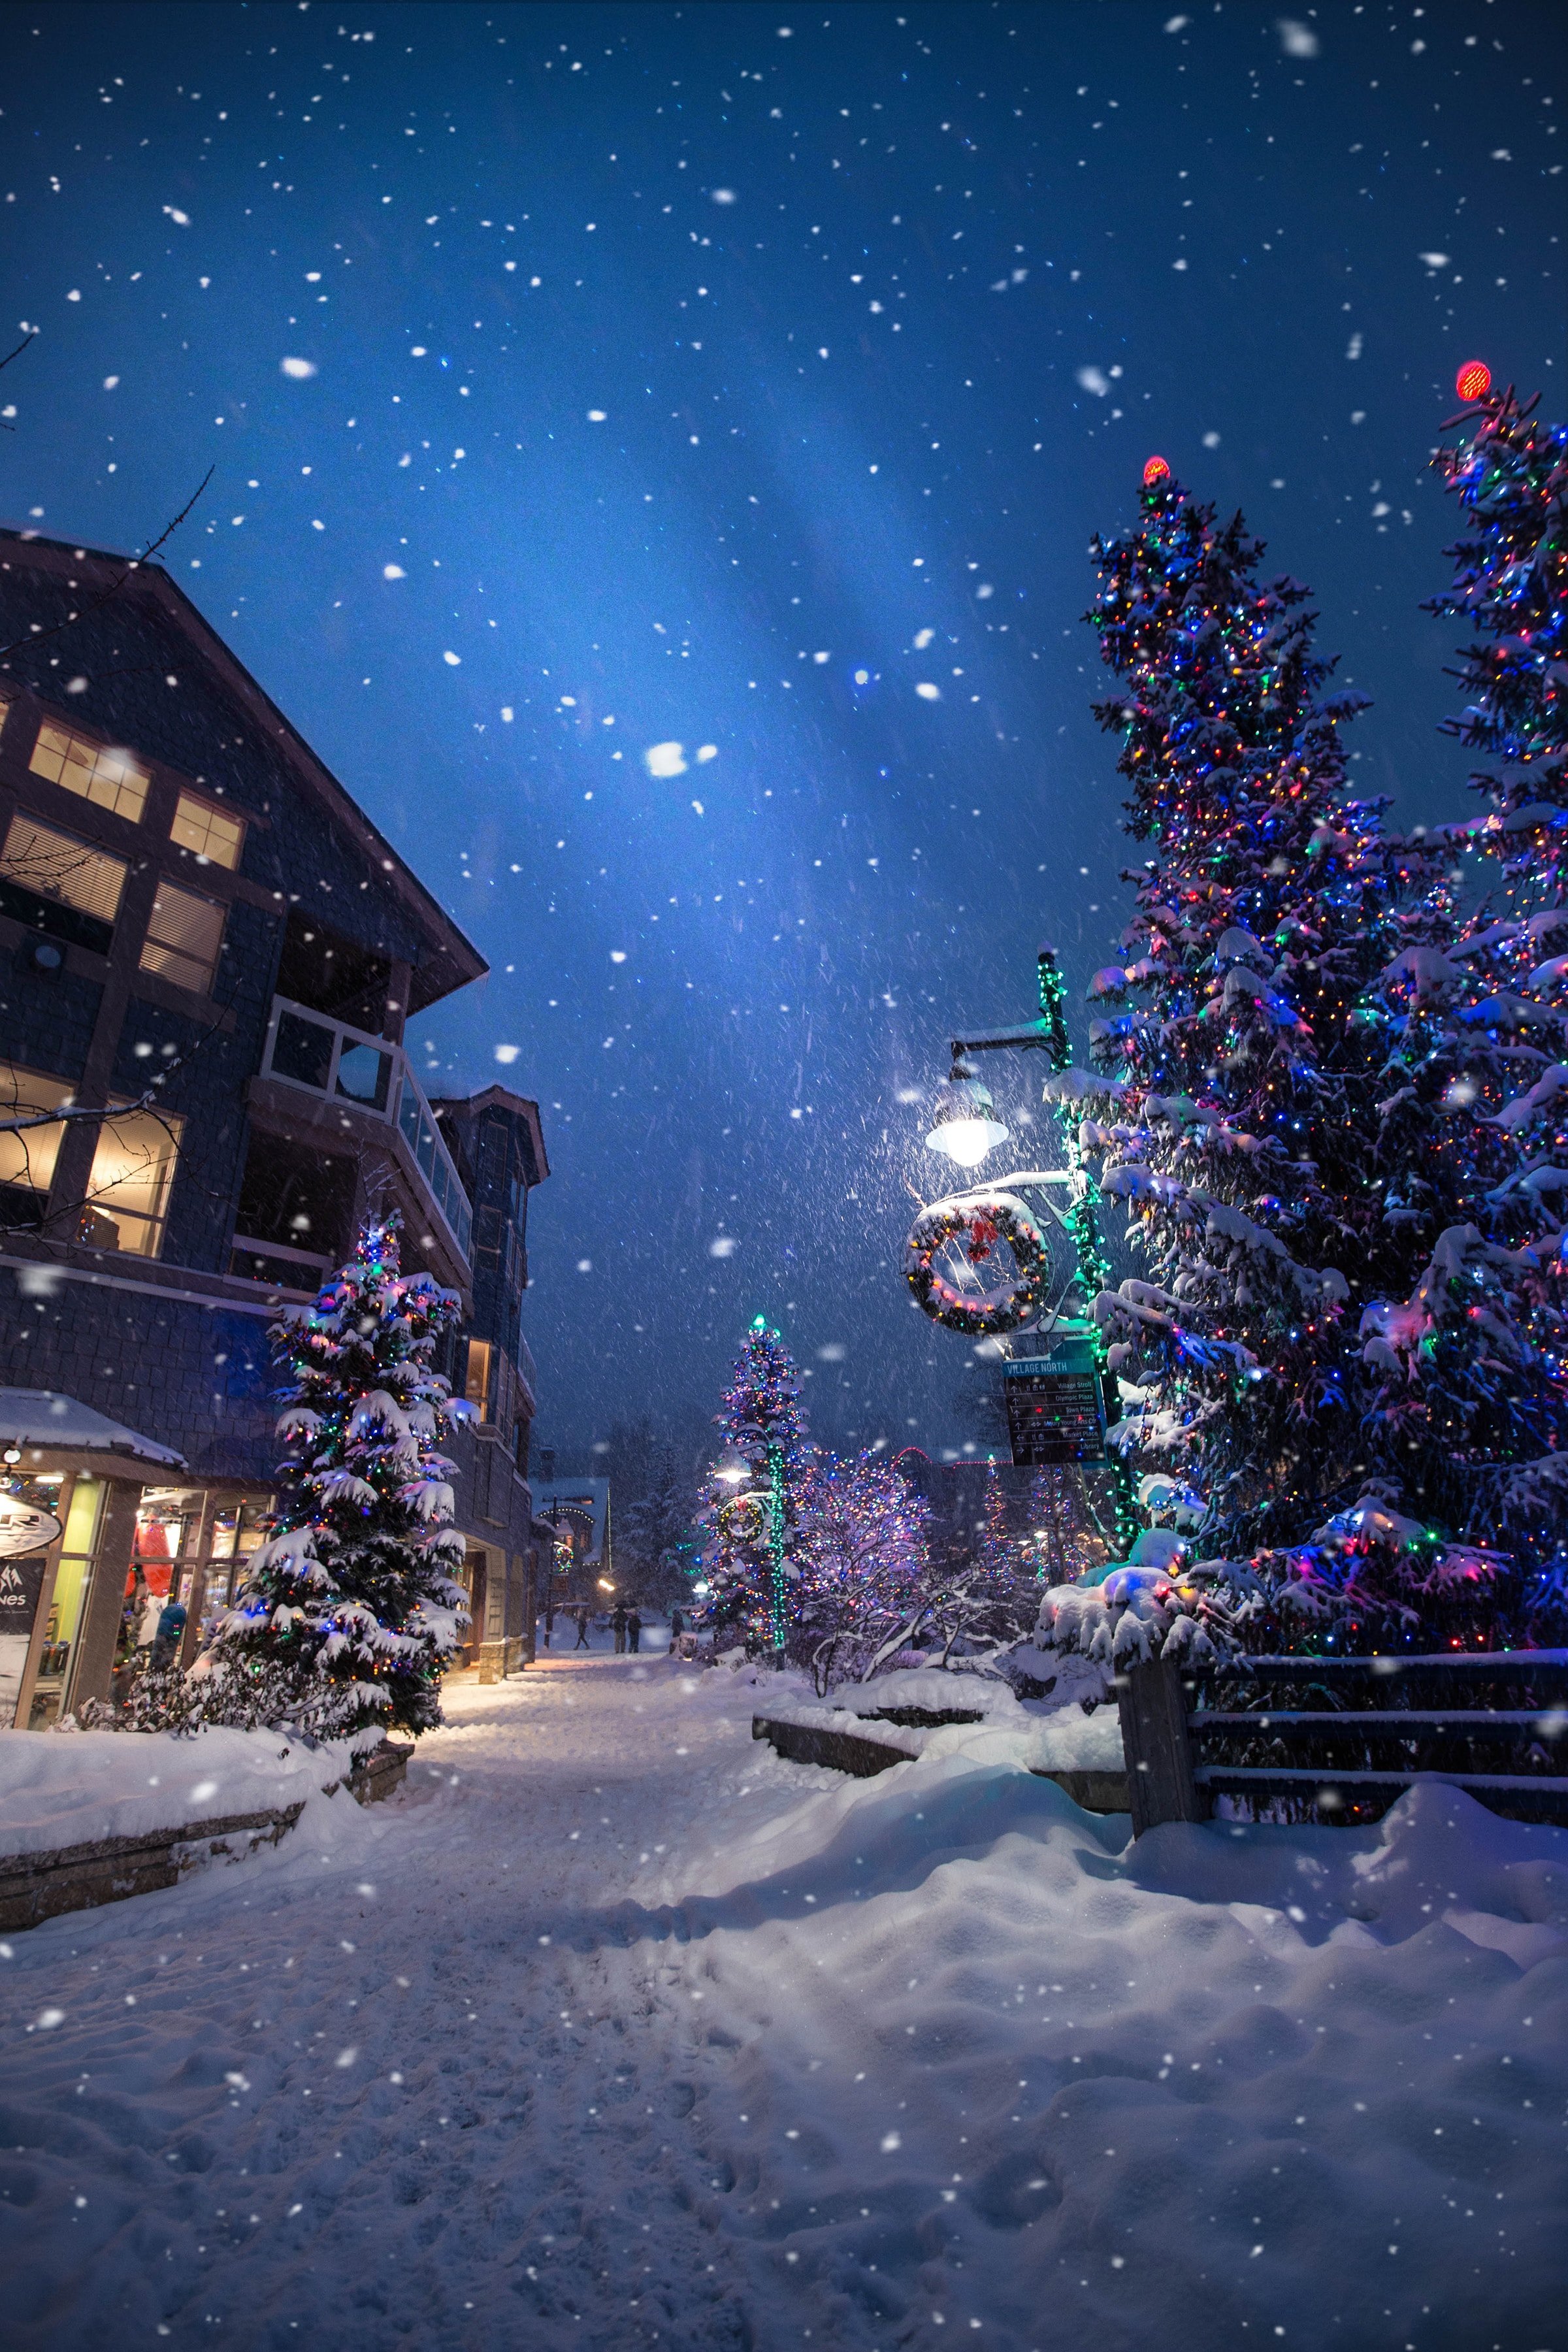 A snowy Christmas street | Source: Unsplash.com